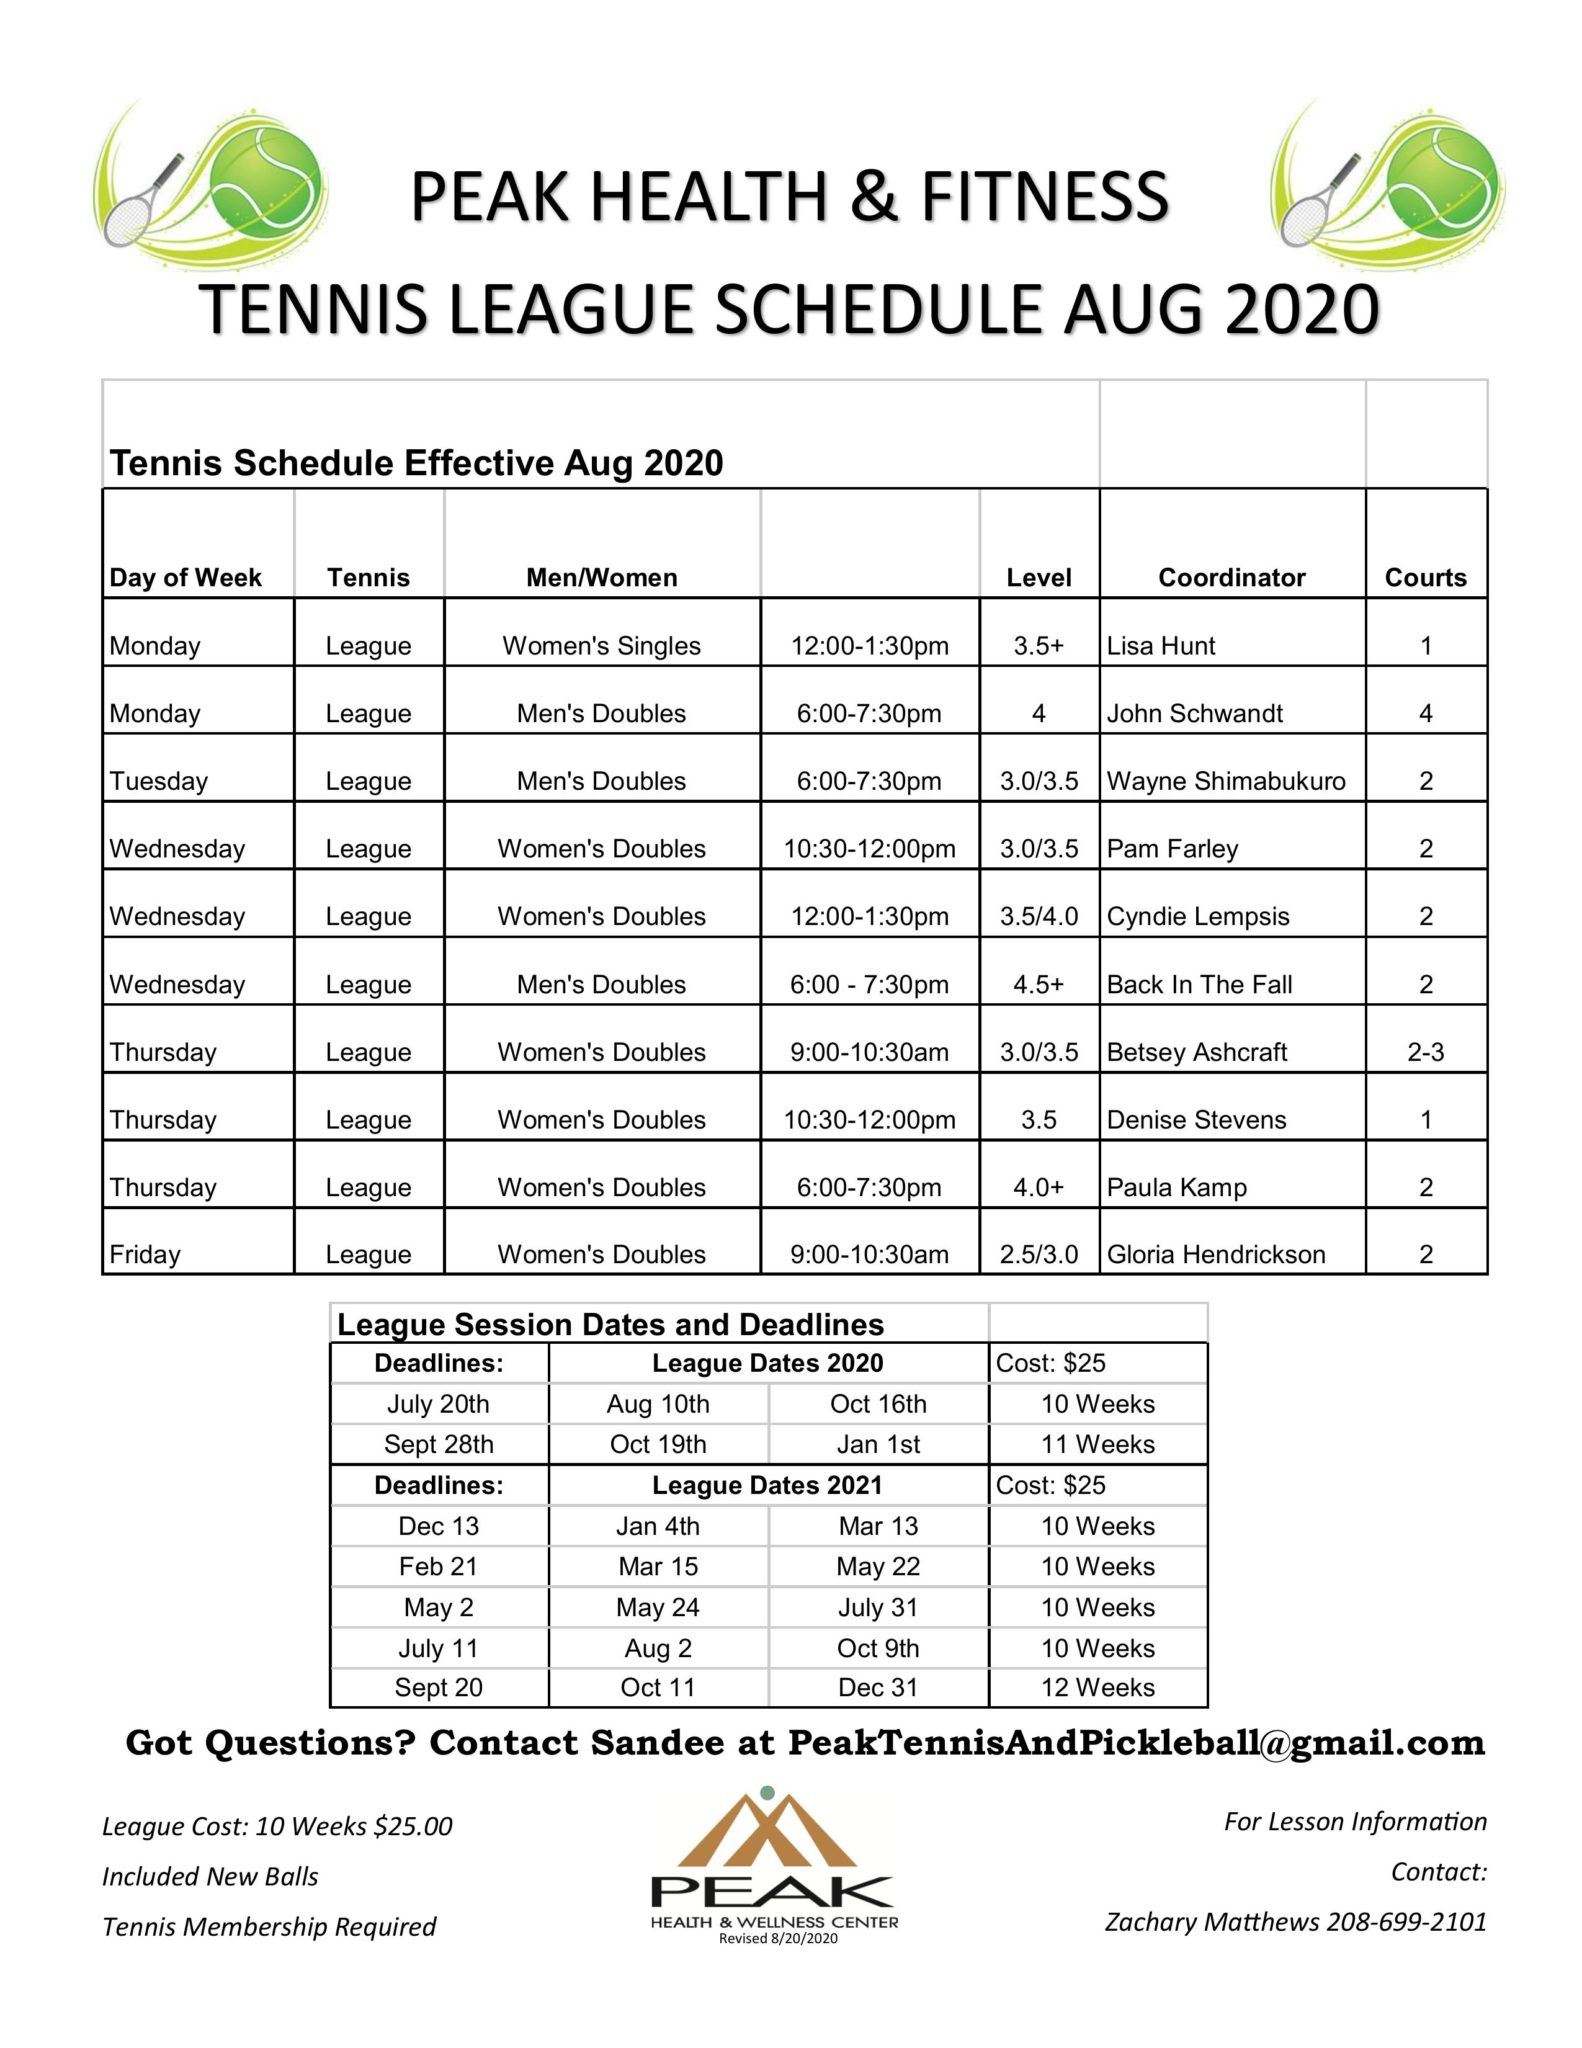 Tennis Schedule Deadlines Aug 2020 Peak Health 